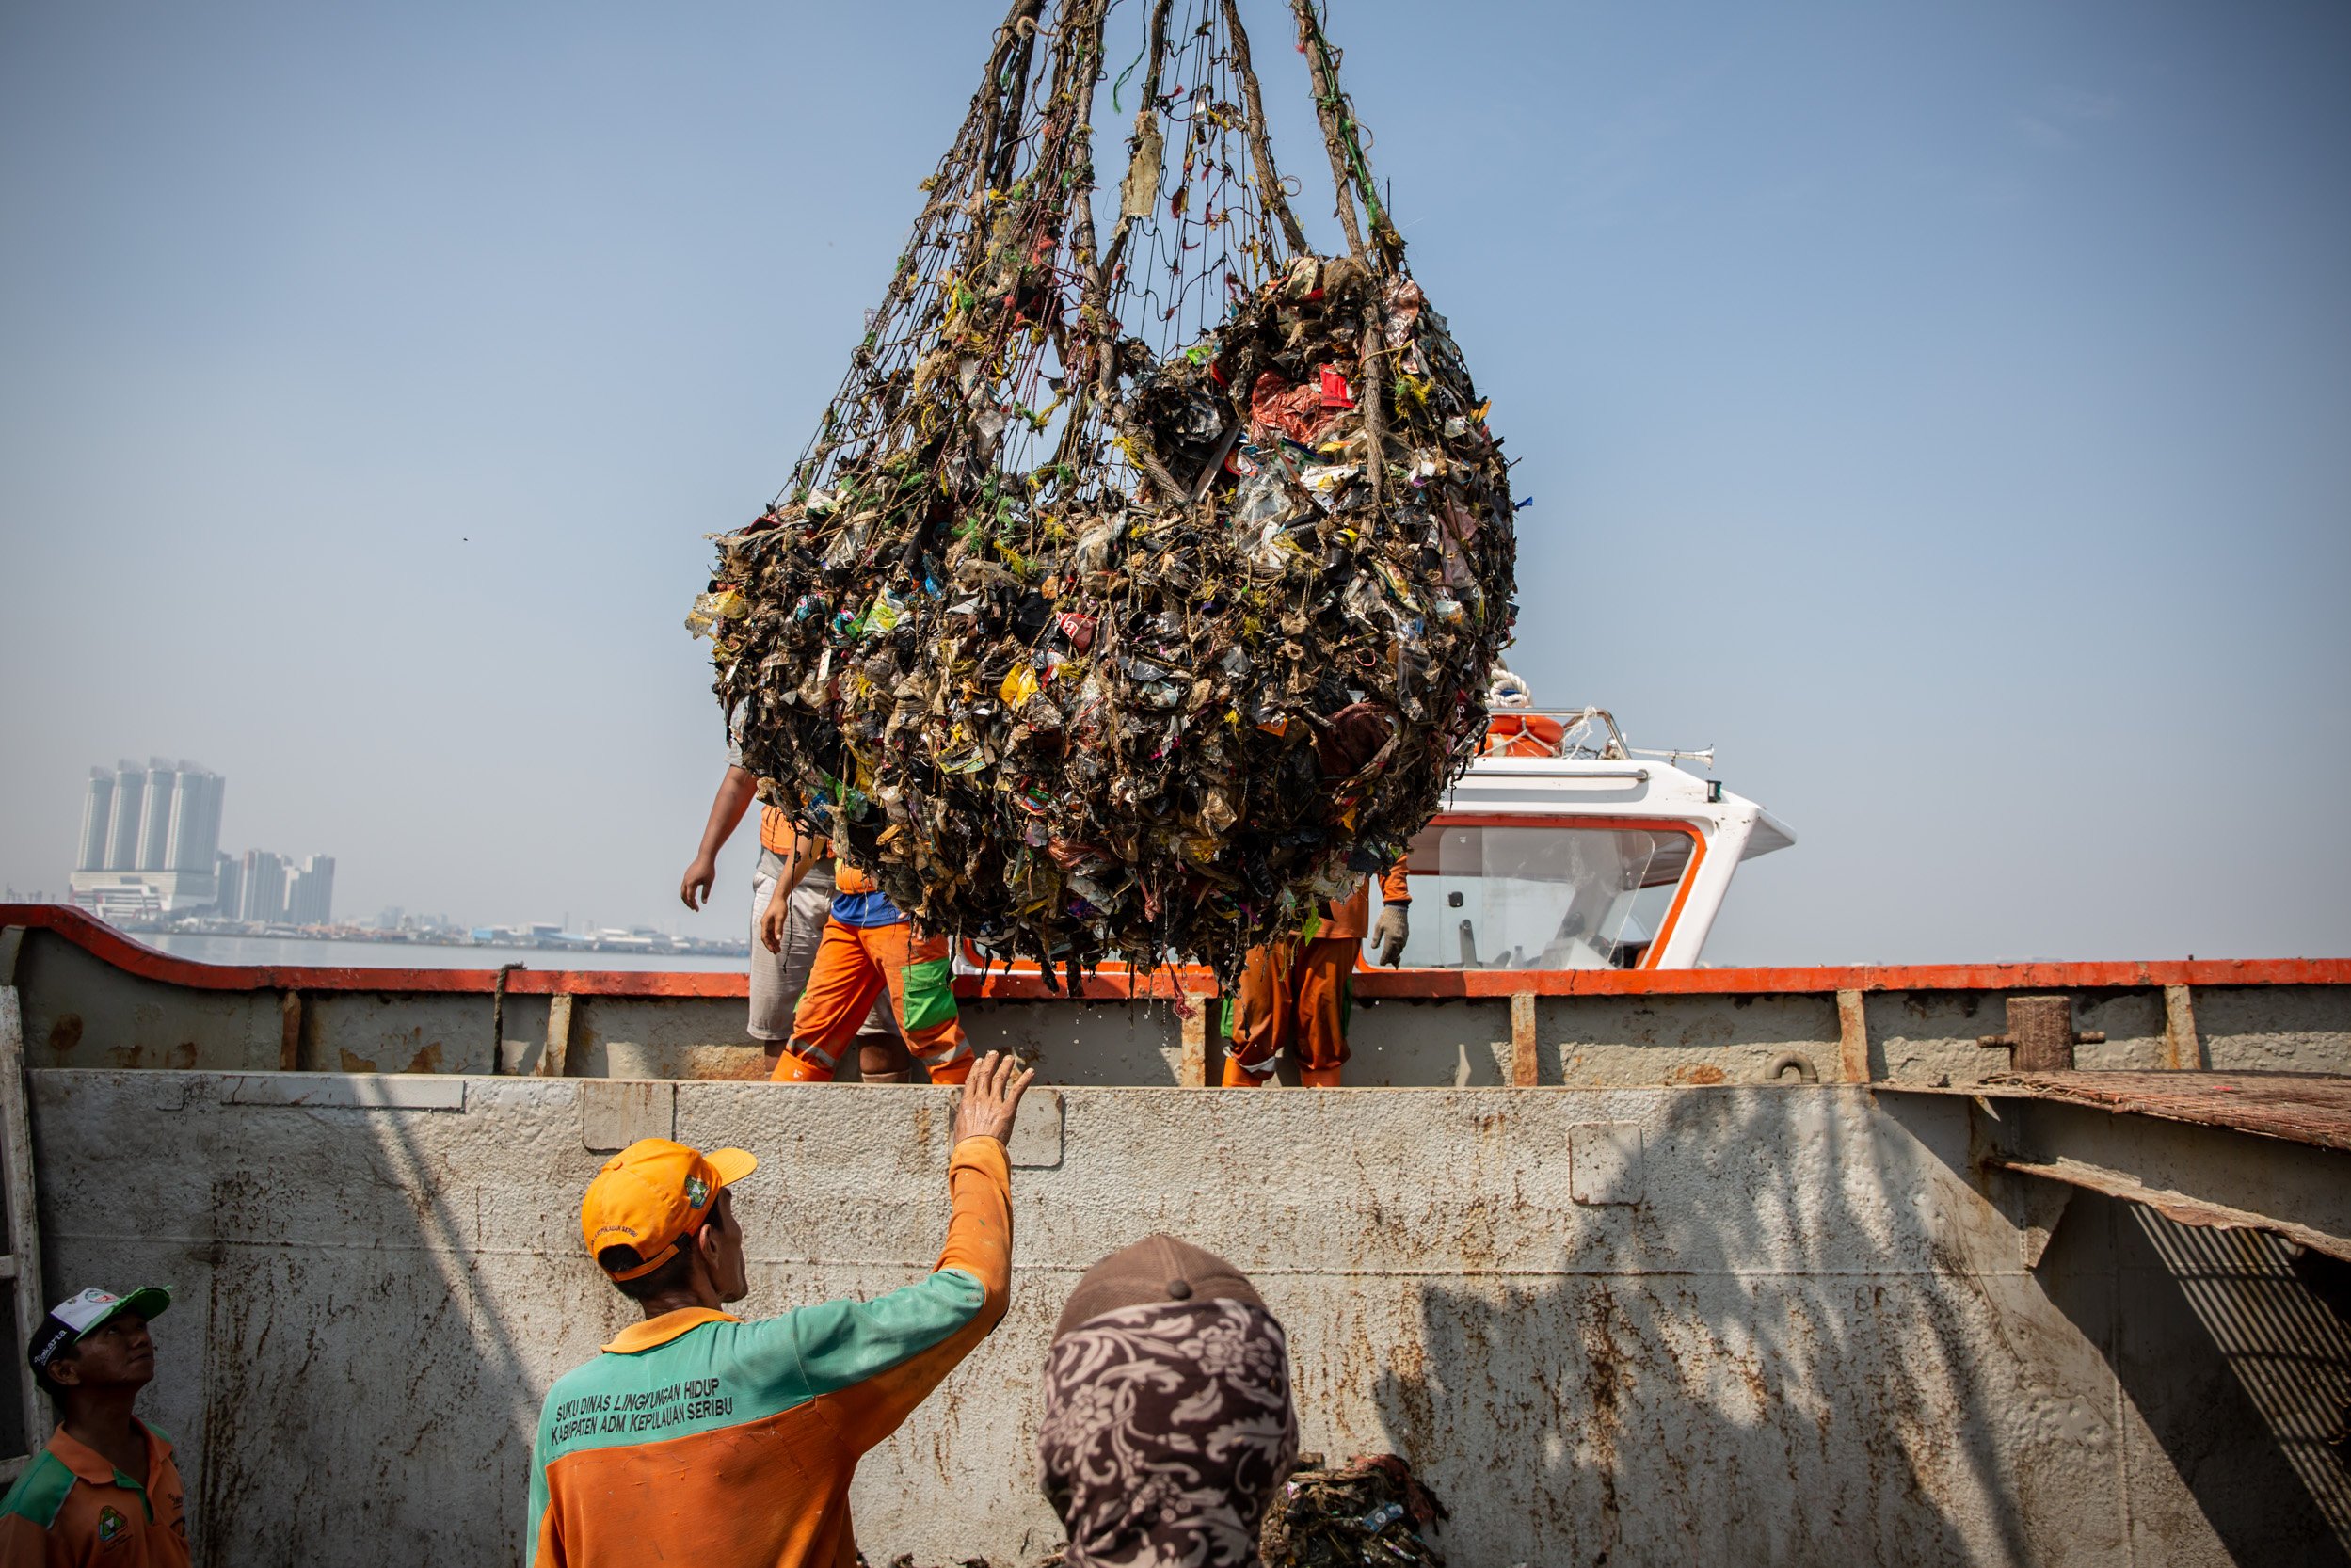 Petugas Penanganan Prasarana & Sarana Umum (PPSU) bersama Dinas Lingkungan Hidup DKI Jakarta memindahkan sampah ke kapal besar saat membersihkan sampah yang menumpuk di hutan mangrove Muara Angke, Penjaringan, Jakarta Utara, Jumat (13/7). Berdasarkan hasil penelitian BRIN, sampah yang terperangkap di Hutan Mangrove Muara Angke bersumber dari wilayah yang tidak jauh dari kawasan mangrove tersebut.